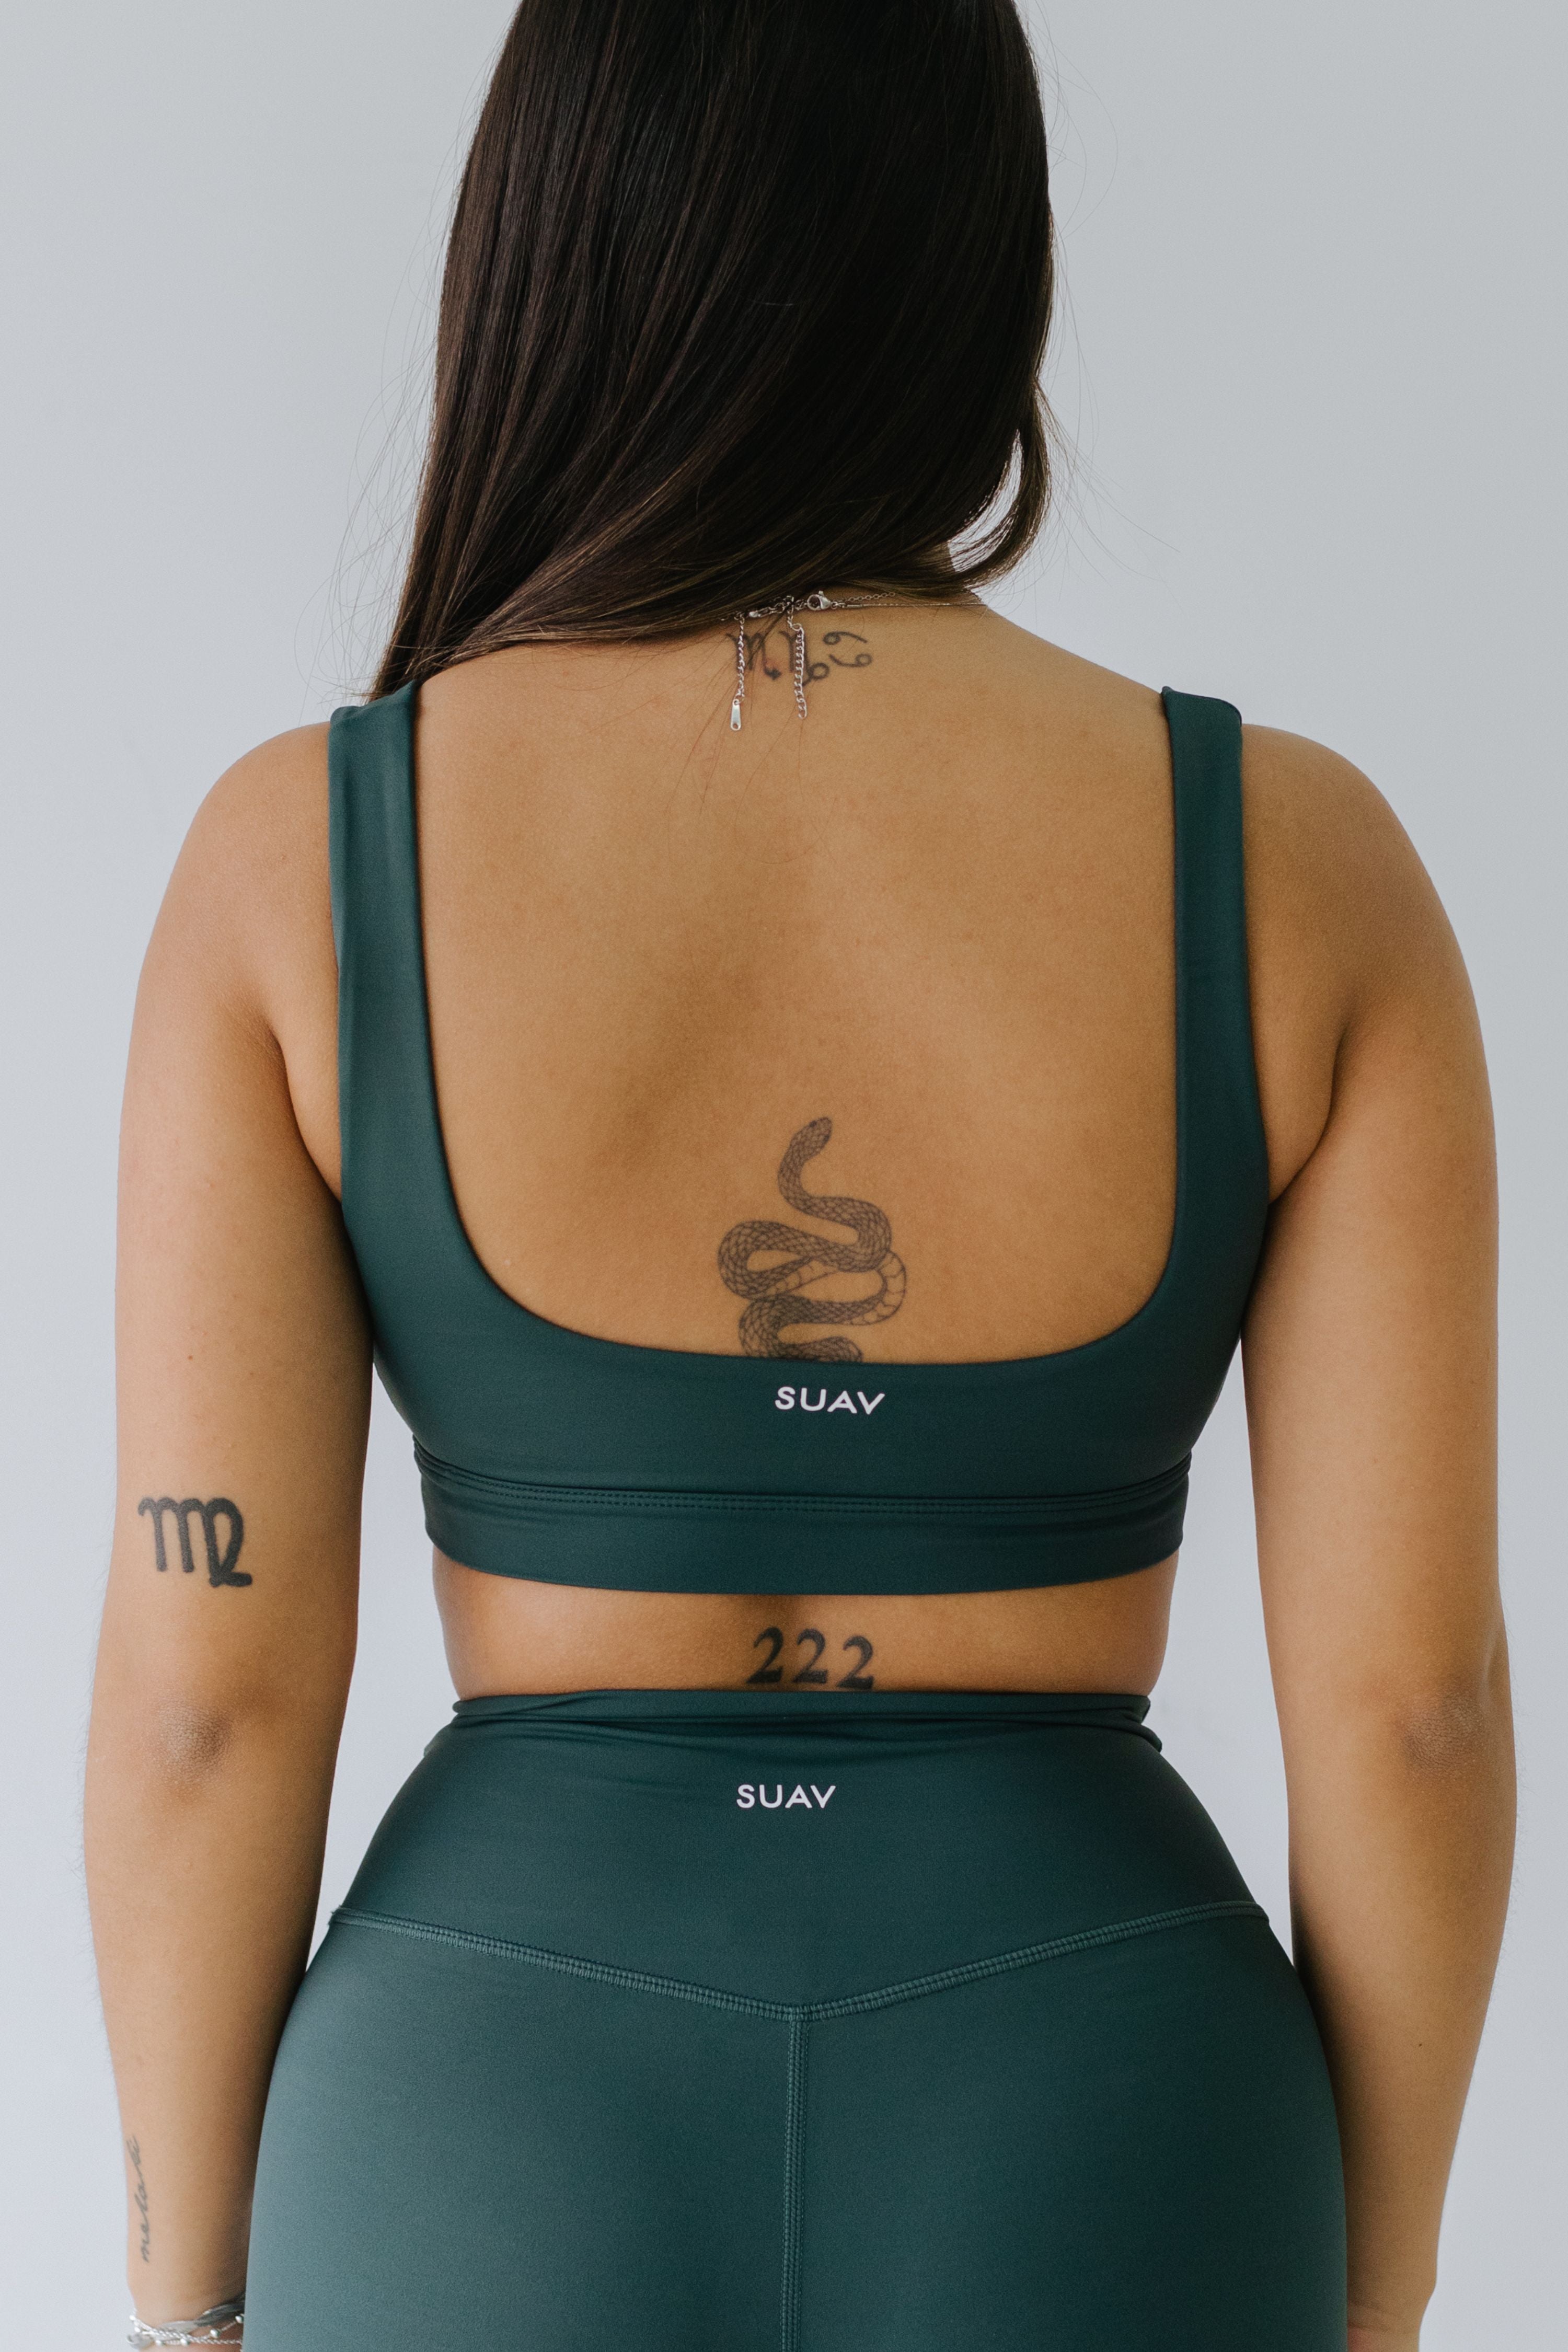 Square Neck Bra in Emerald – Suav activewear